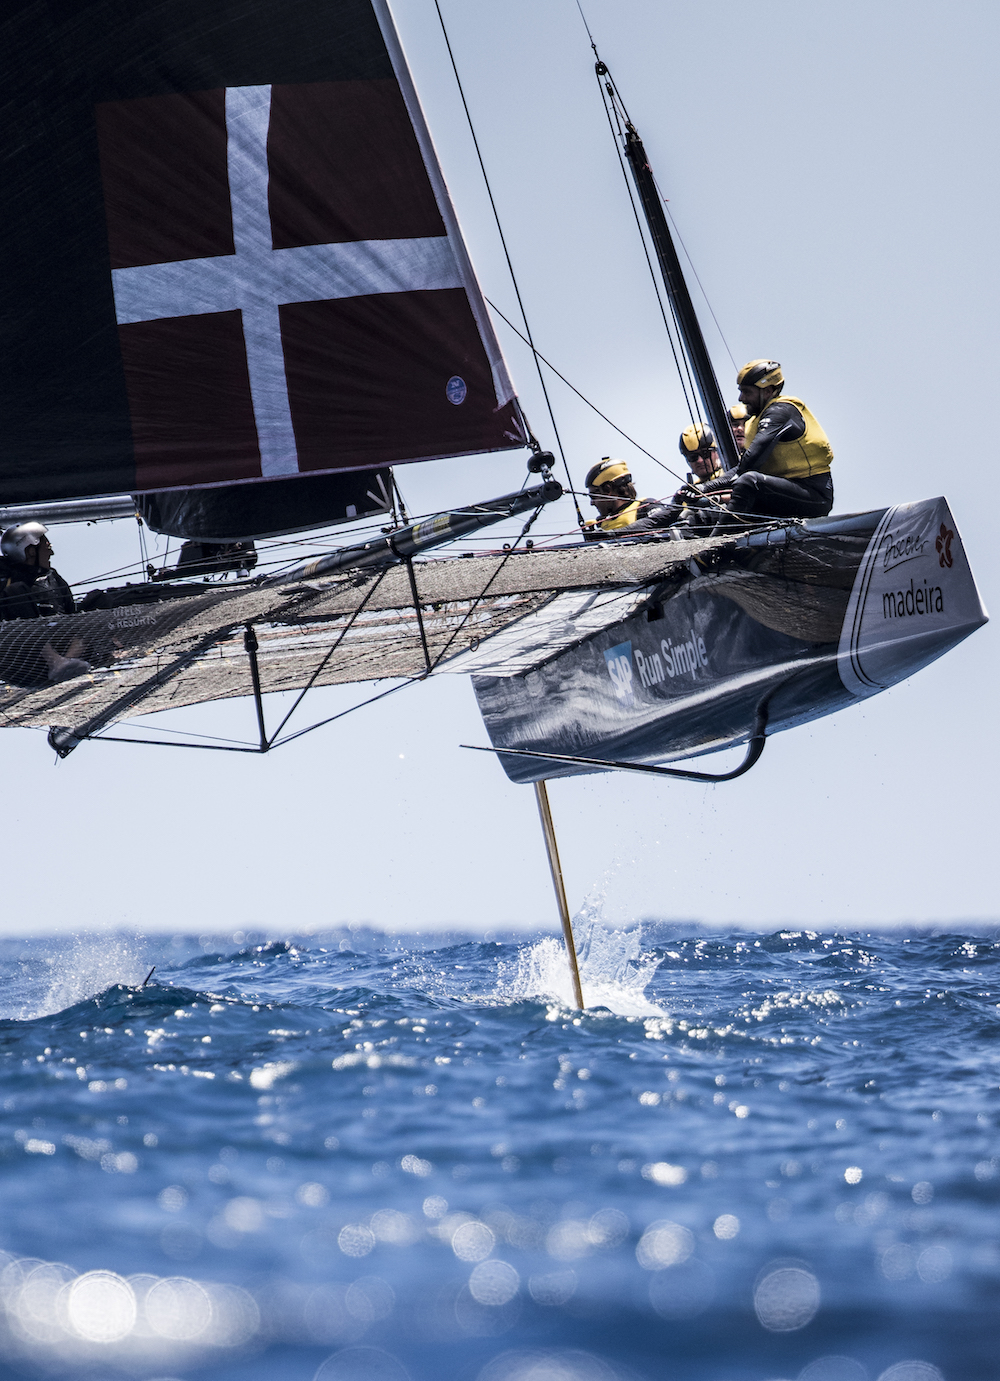  GC32Catamaran, Flying Phantom  Extreme Sailing Series, Act 3  Madeira POR  Final results, SAP first ahead of Alinghi